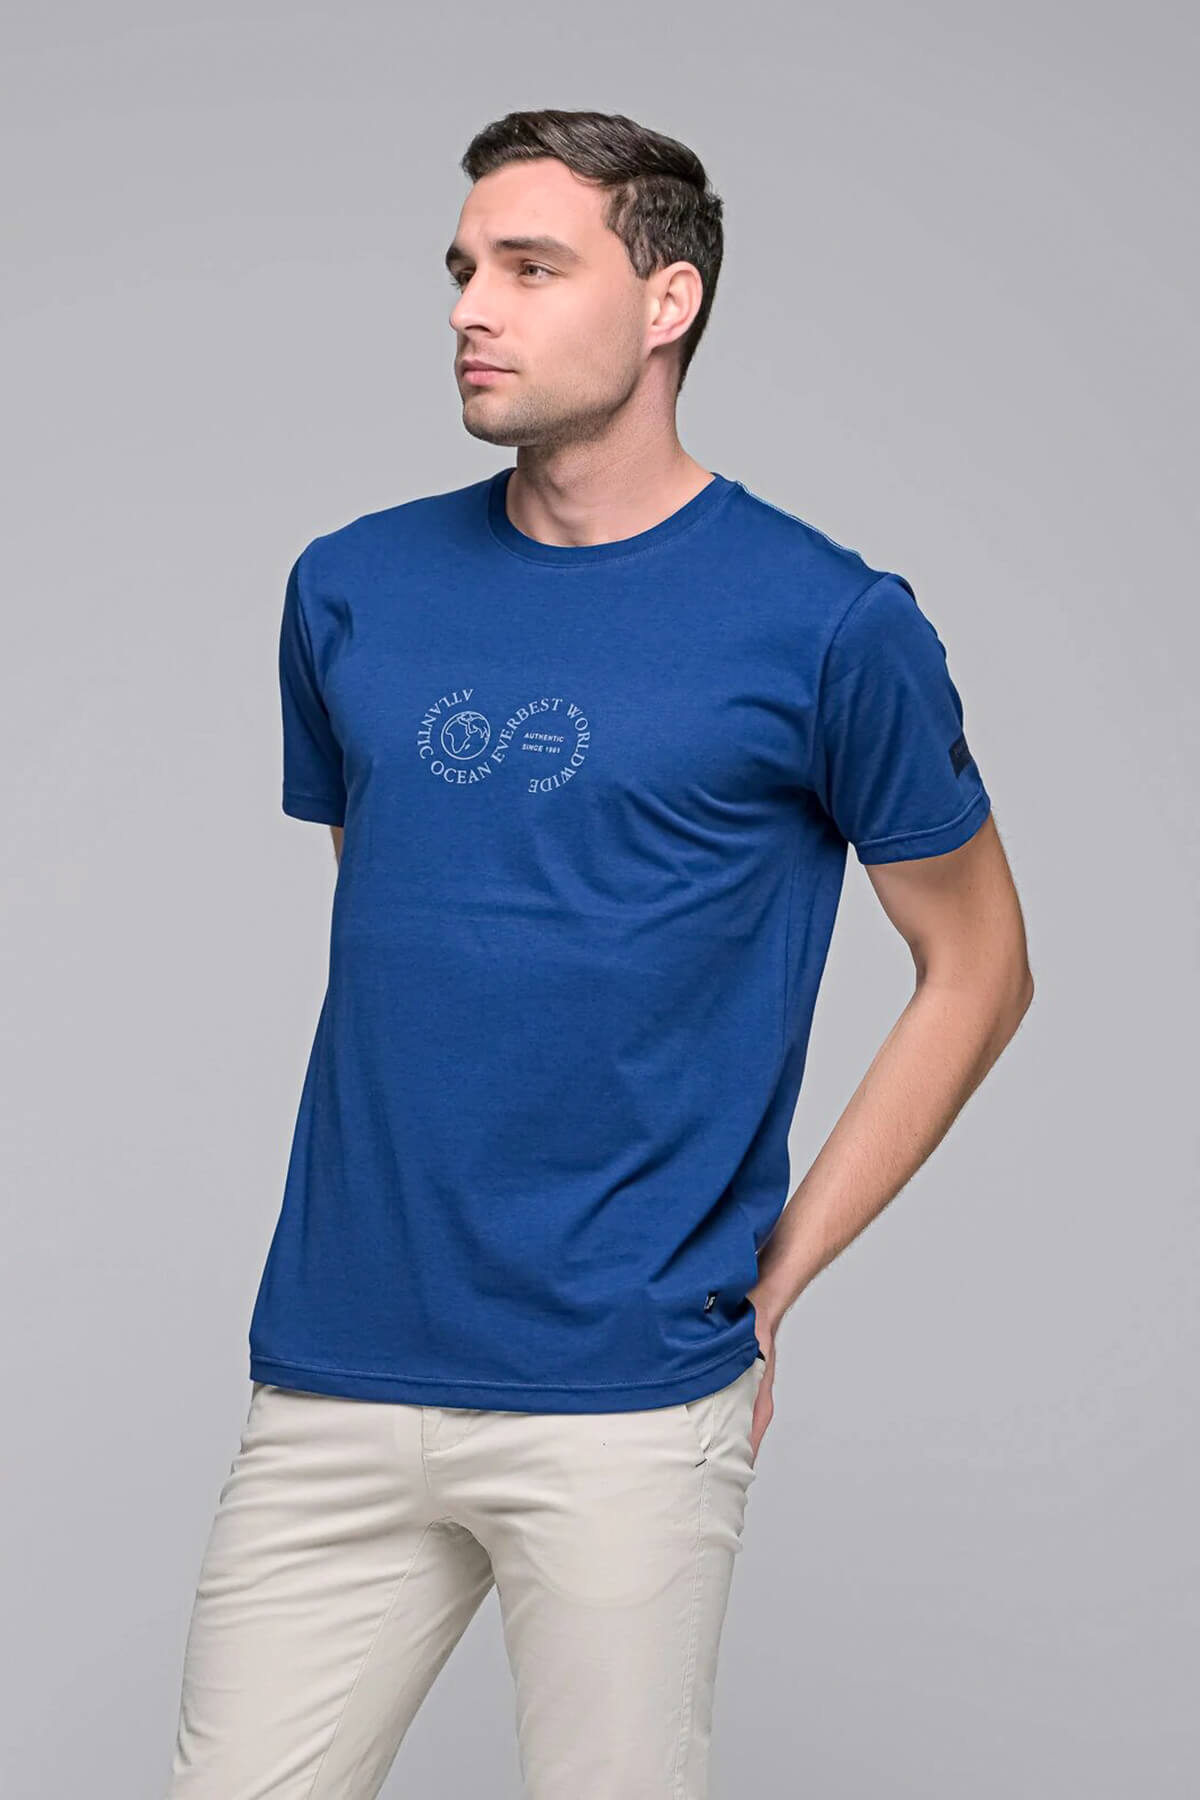 Everbest T-shirt Με Λογότυπο Atlantic Ocean